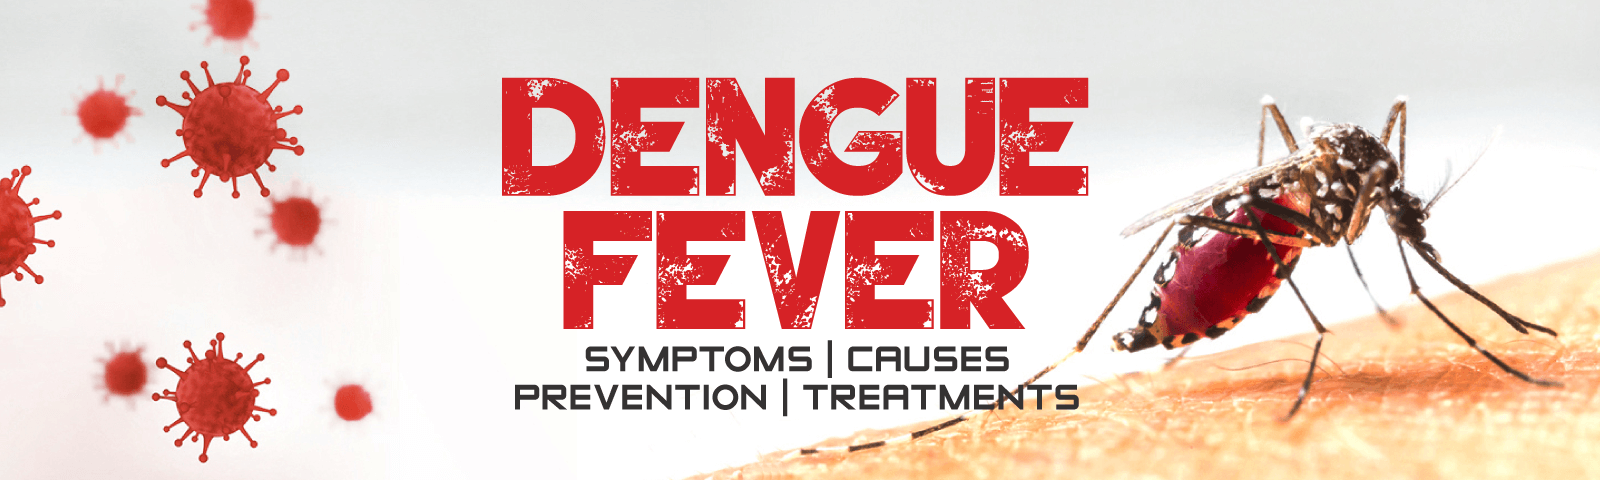 Health-Alert-Dengue-fever